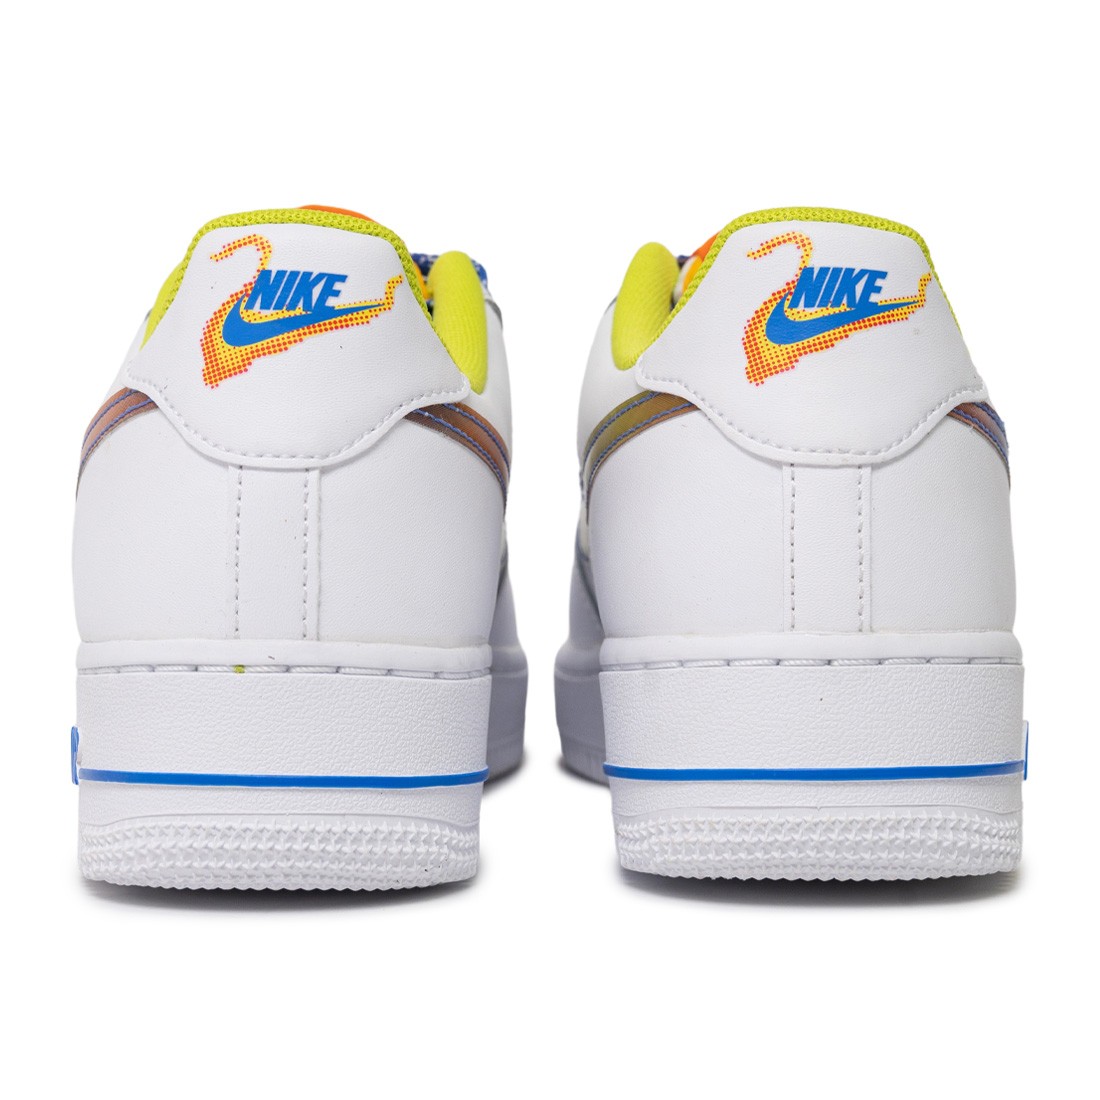  Nike Boy's Air Force 1 LV8 1 (Big Kid) White/White